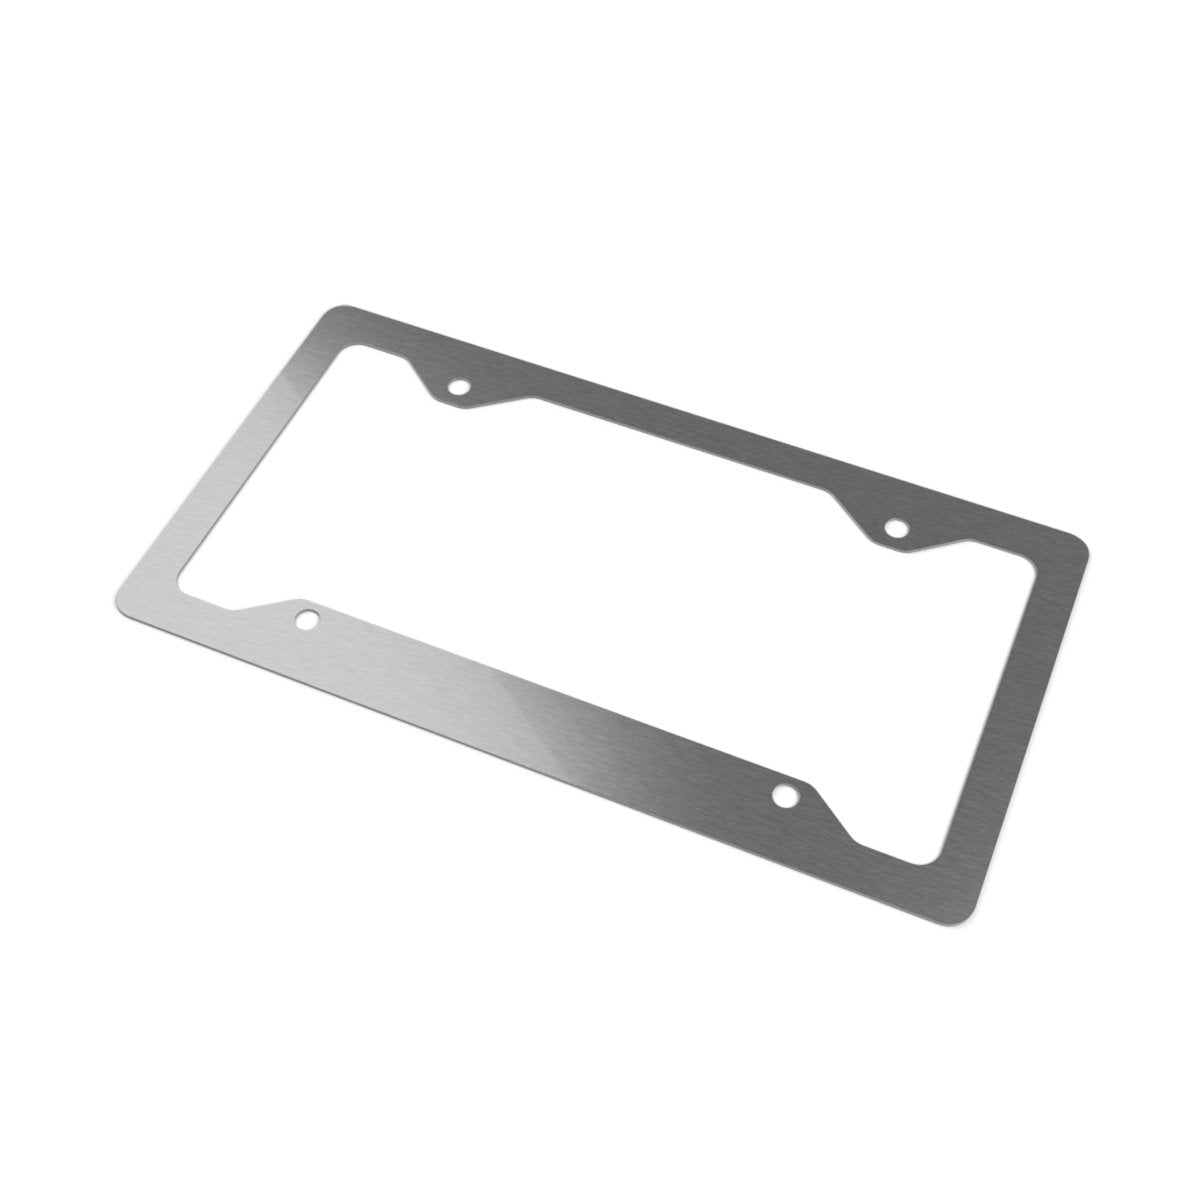 Script Alfa Romeo: Metal License Plate Frame (Alfa 2023 F1 Livery Black ) - Custom, Personalized - Accessories - AI Print Spot